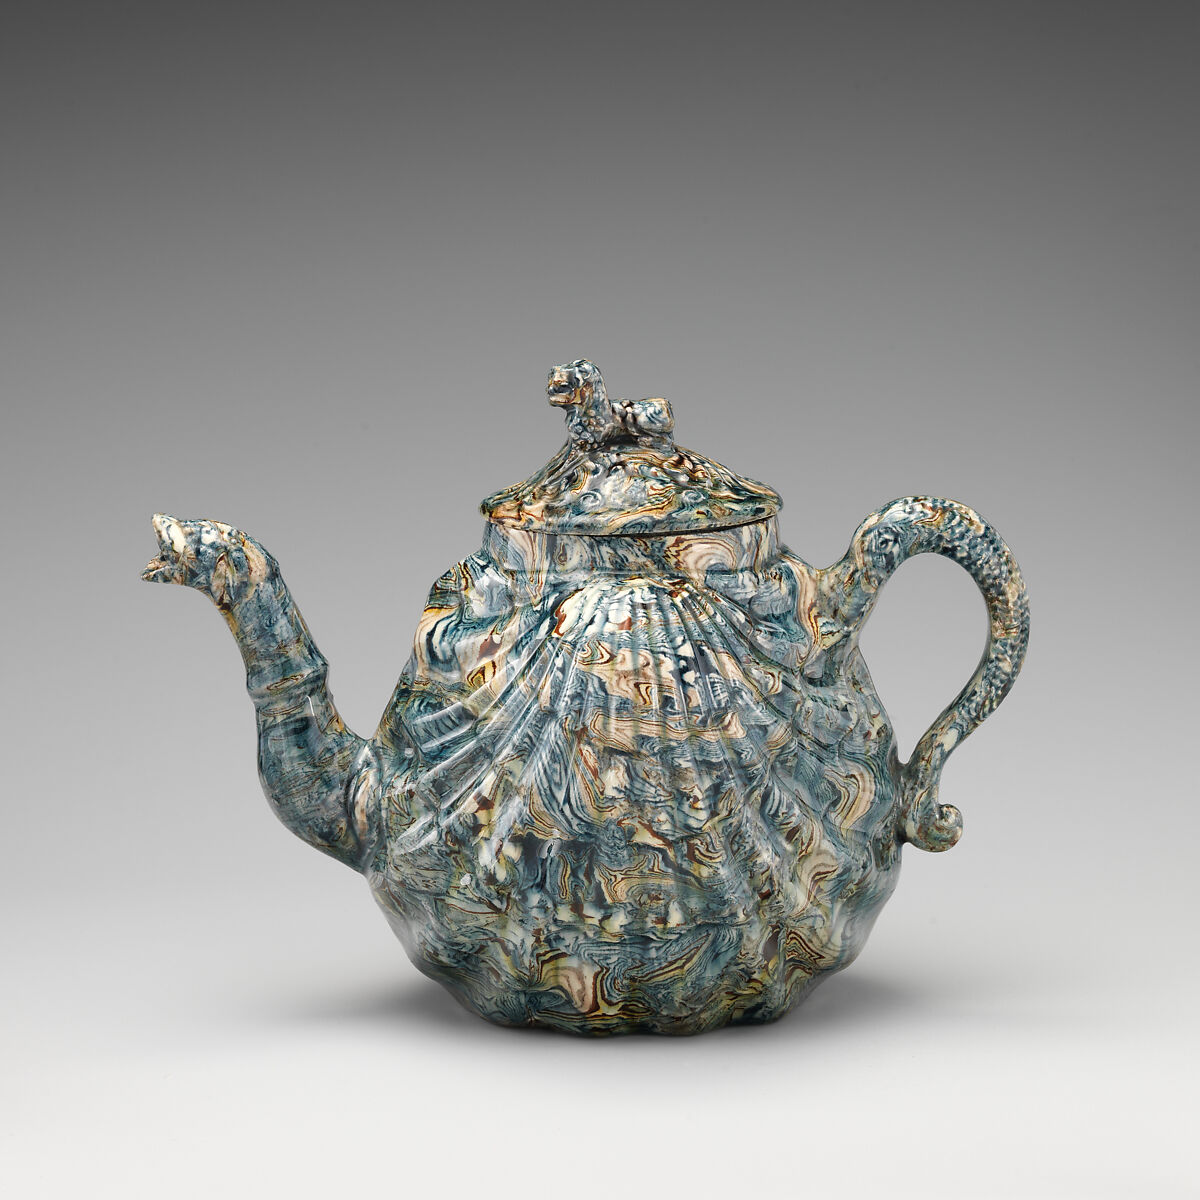 Teapot, Style of Whieldon type, Agateware (glazed earthenware), probably British, Staffordshire 